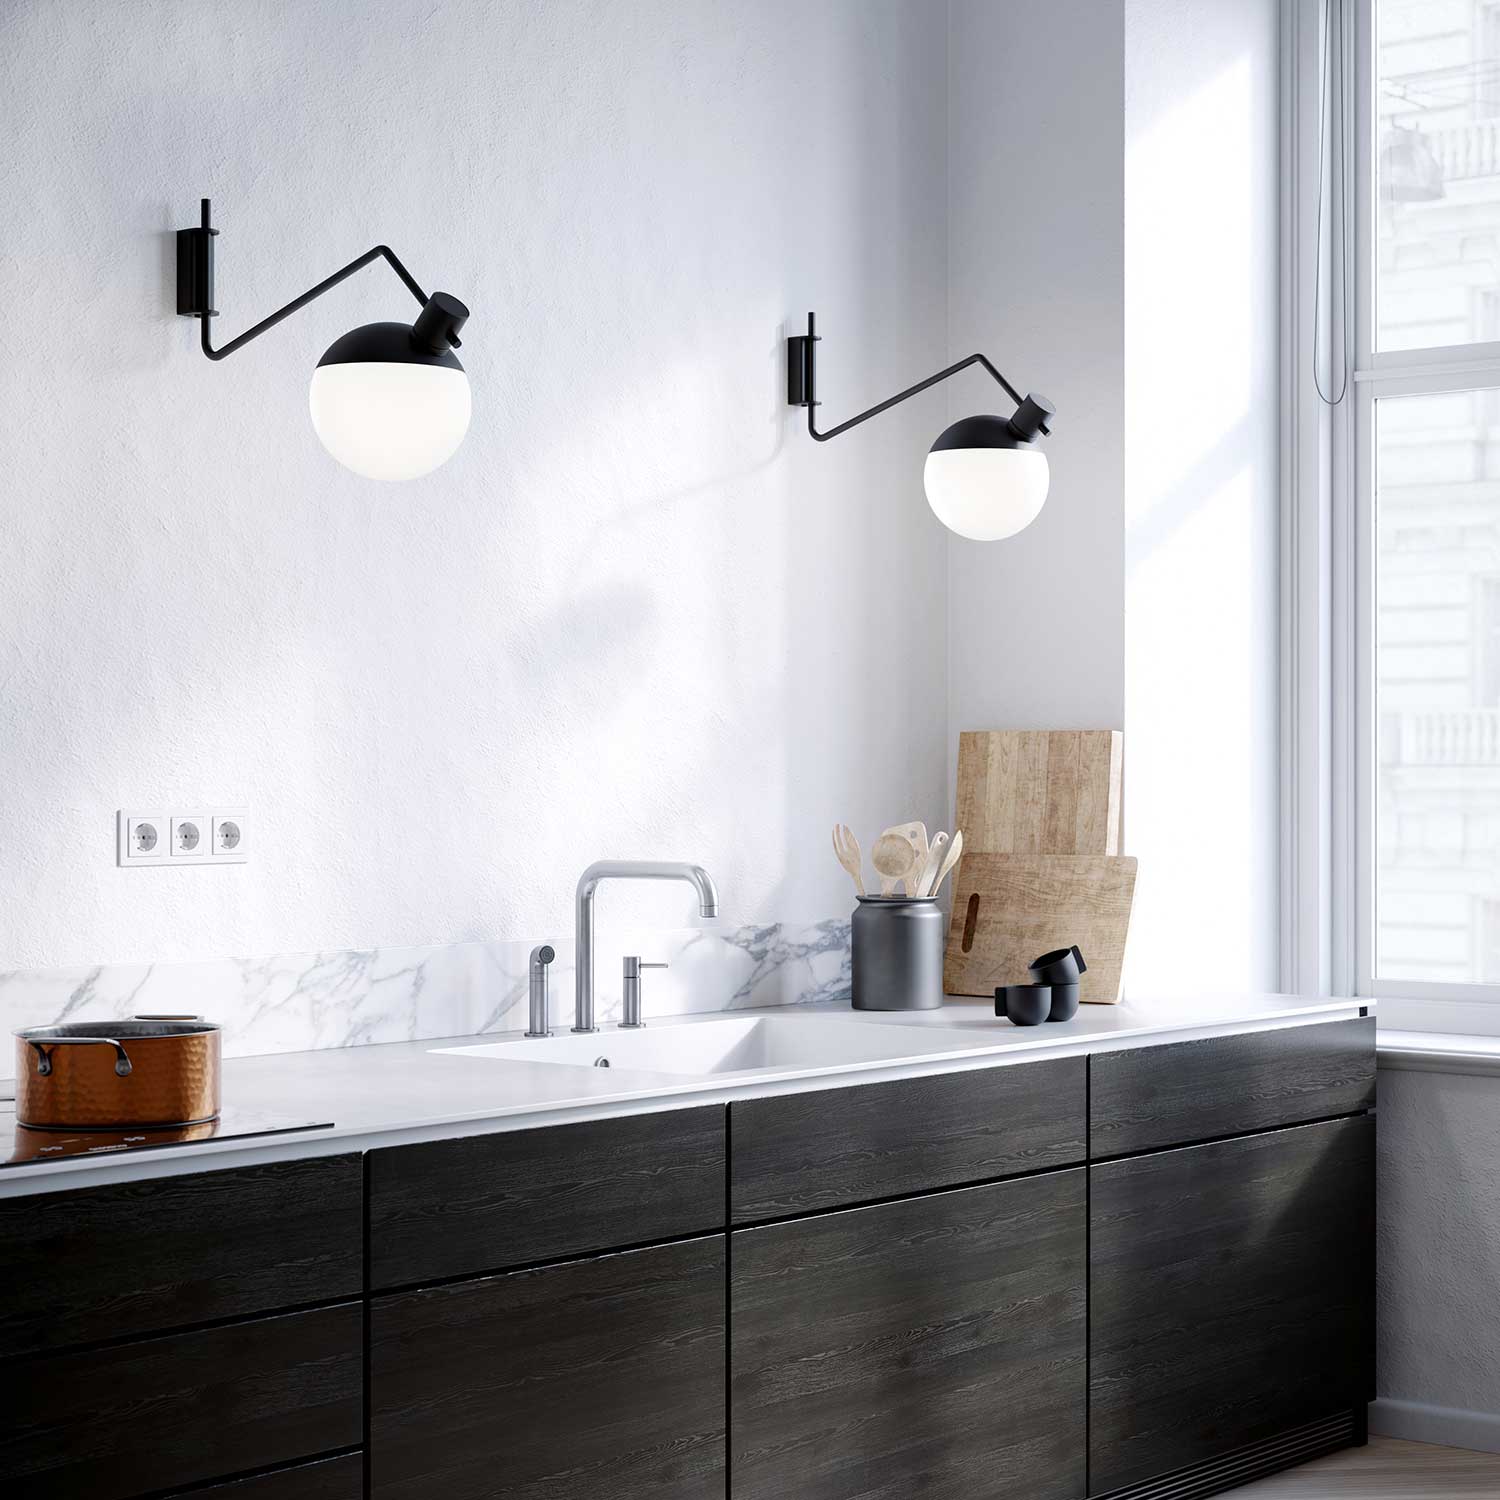 Innovative kitchen wall lighting